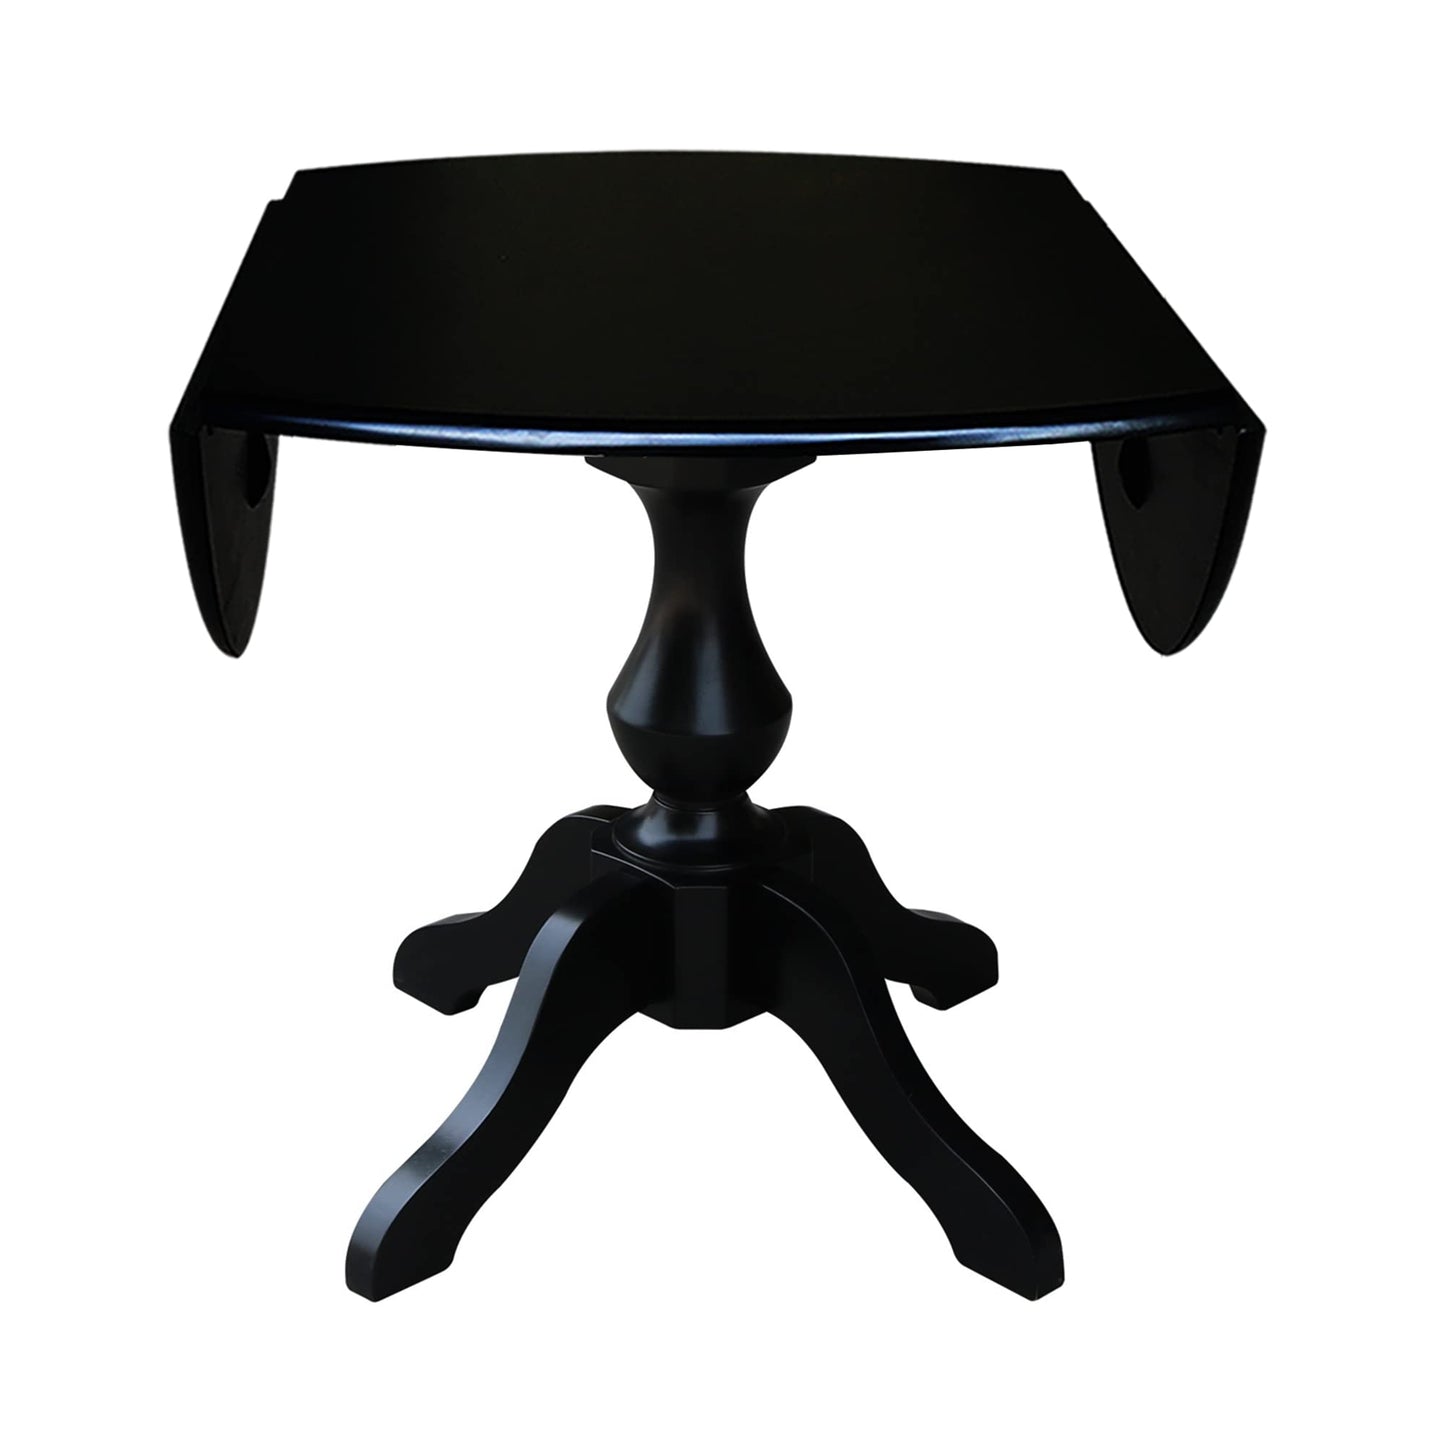 IC International Concepts 42" Round Dual Drop Leaf Pedestal, 30.3" H Dining Table, Black